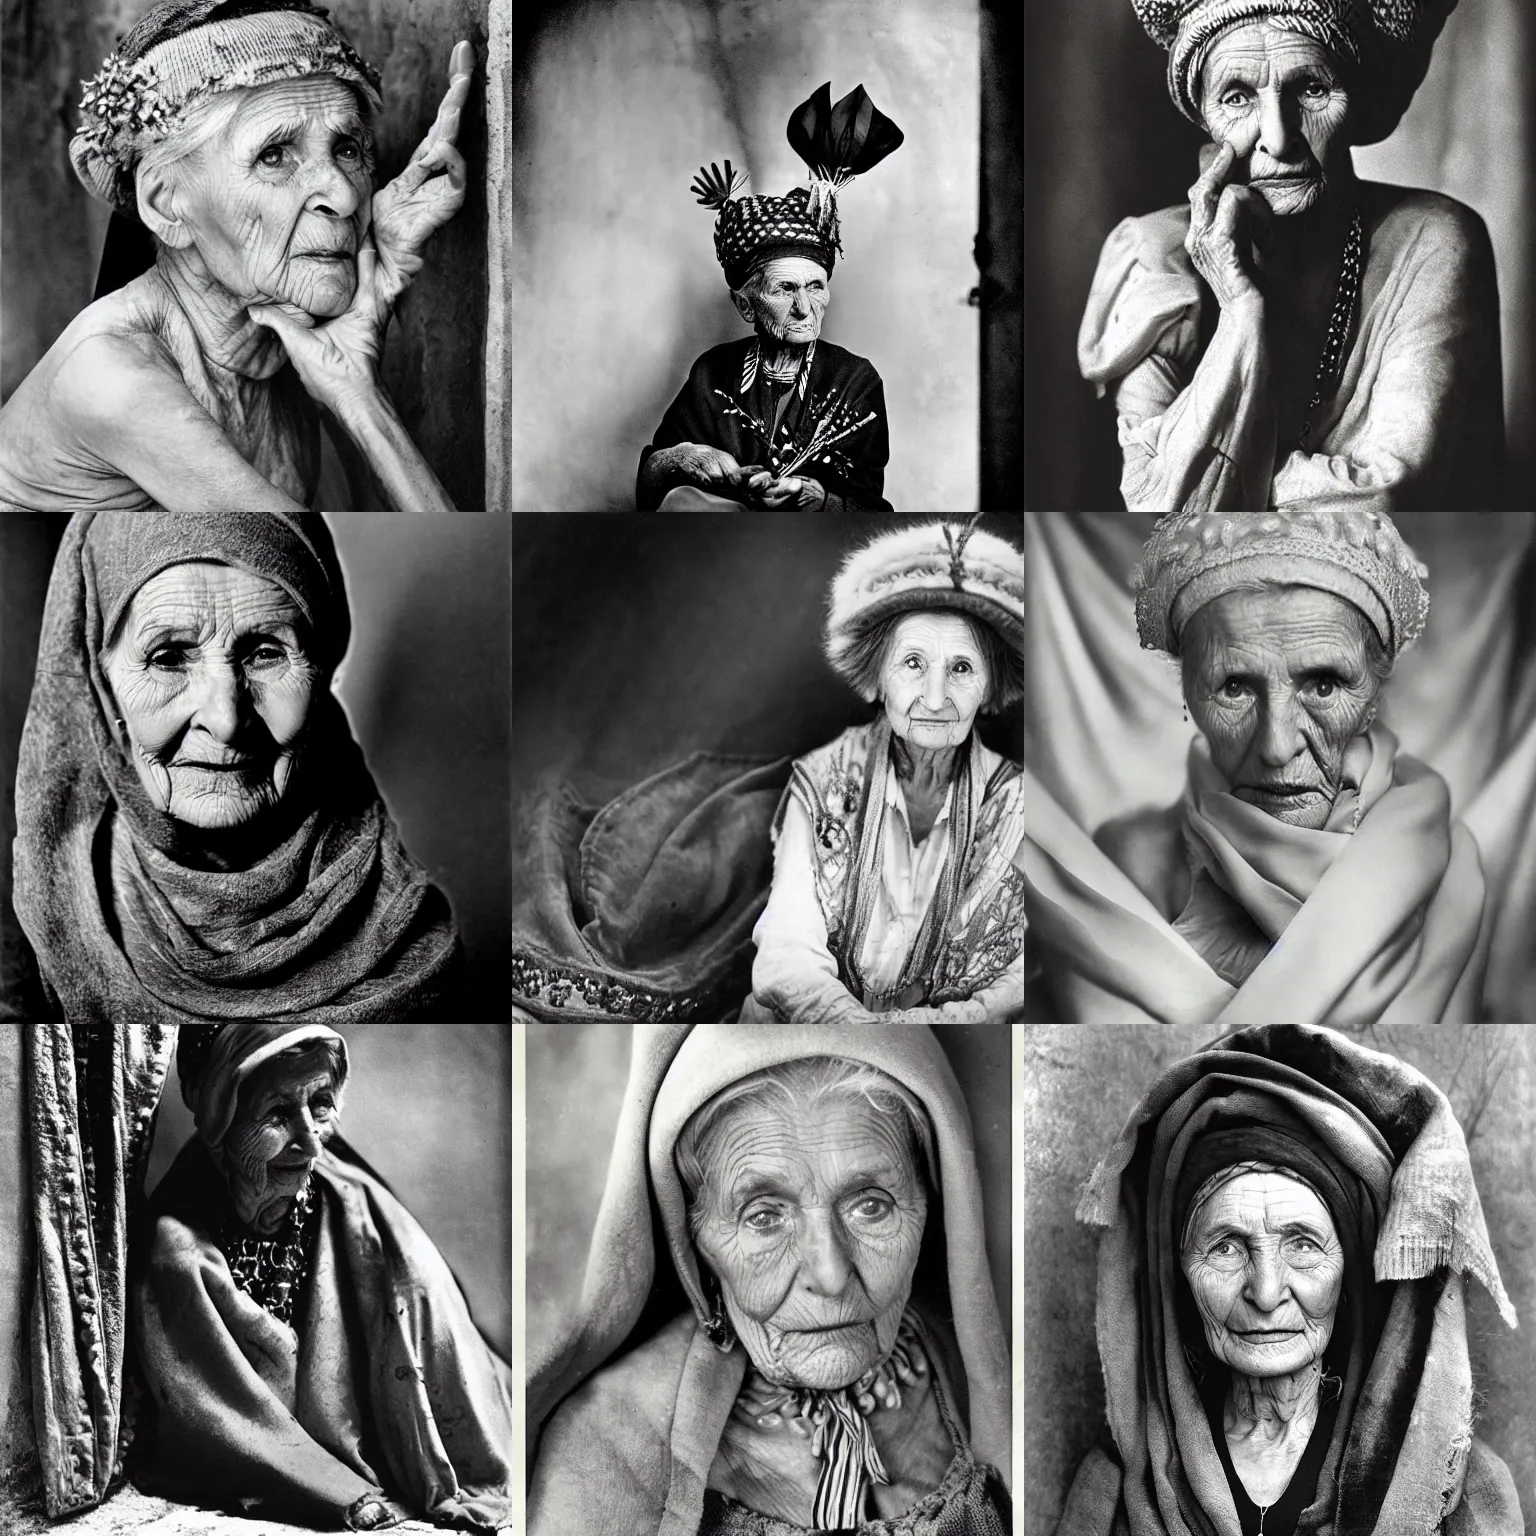 Prompt: an old eastern european woman, award winning photo by angus mcbean